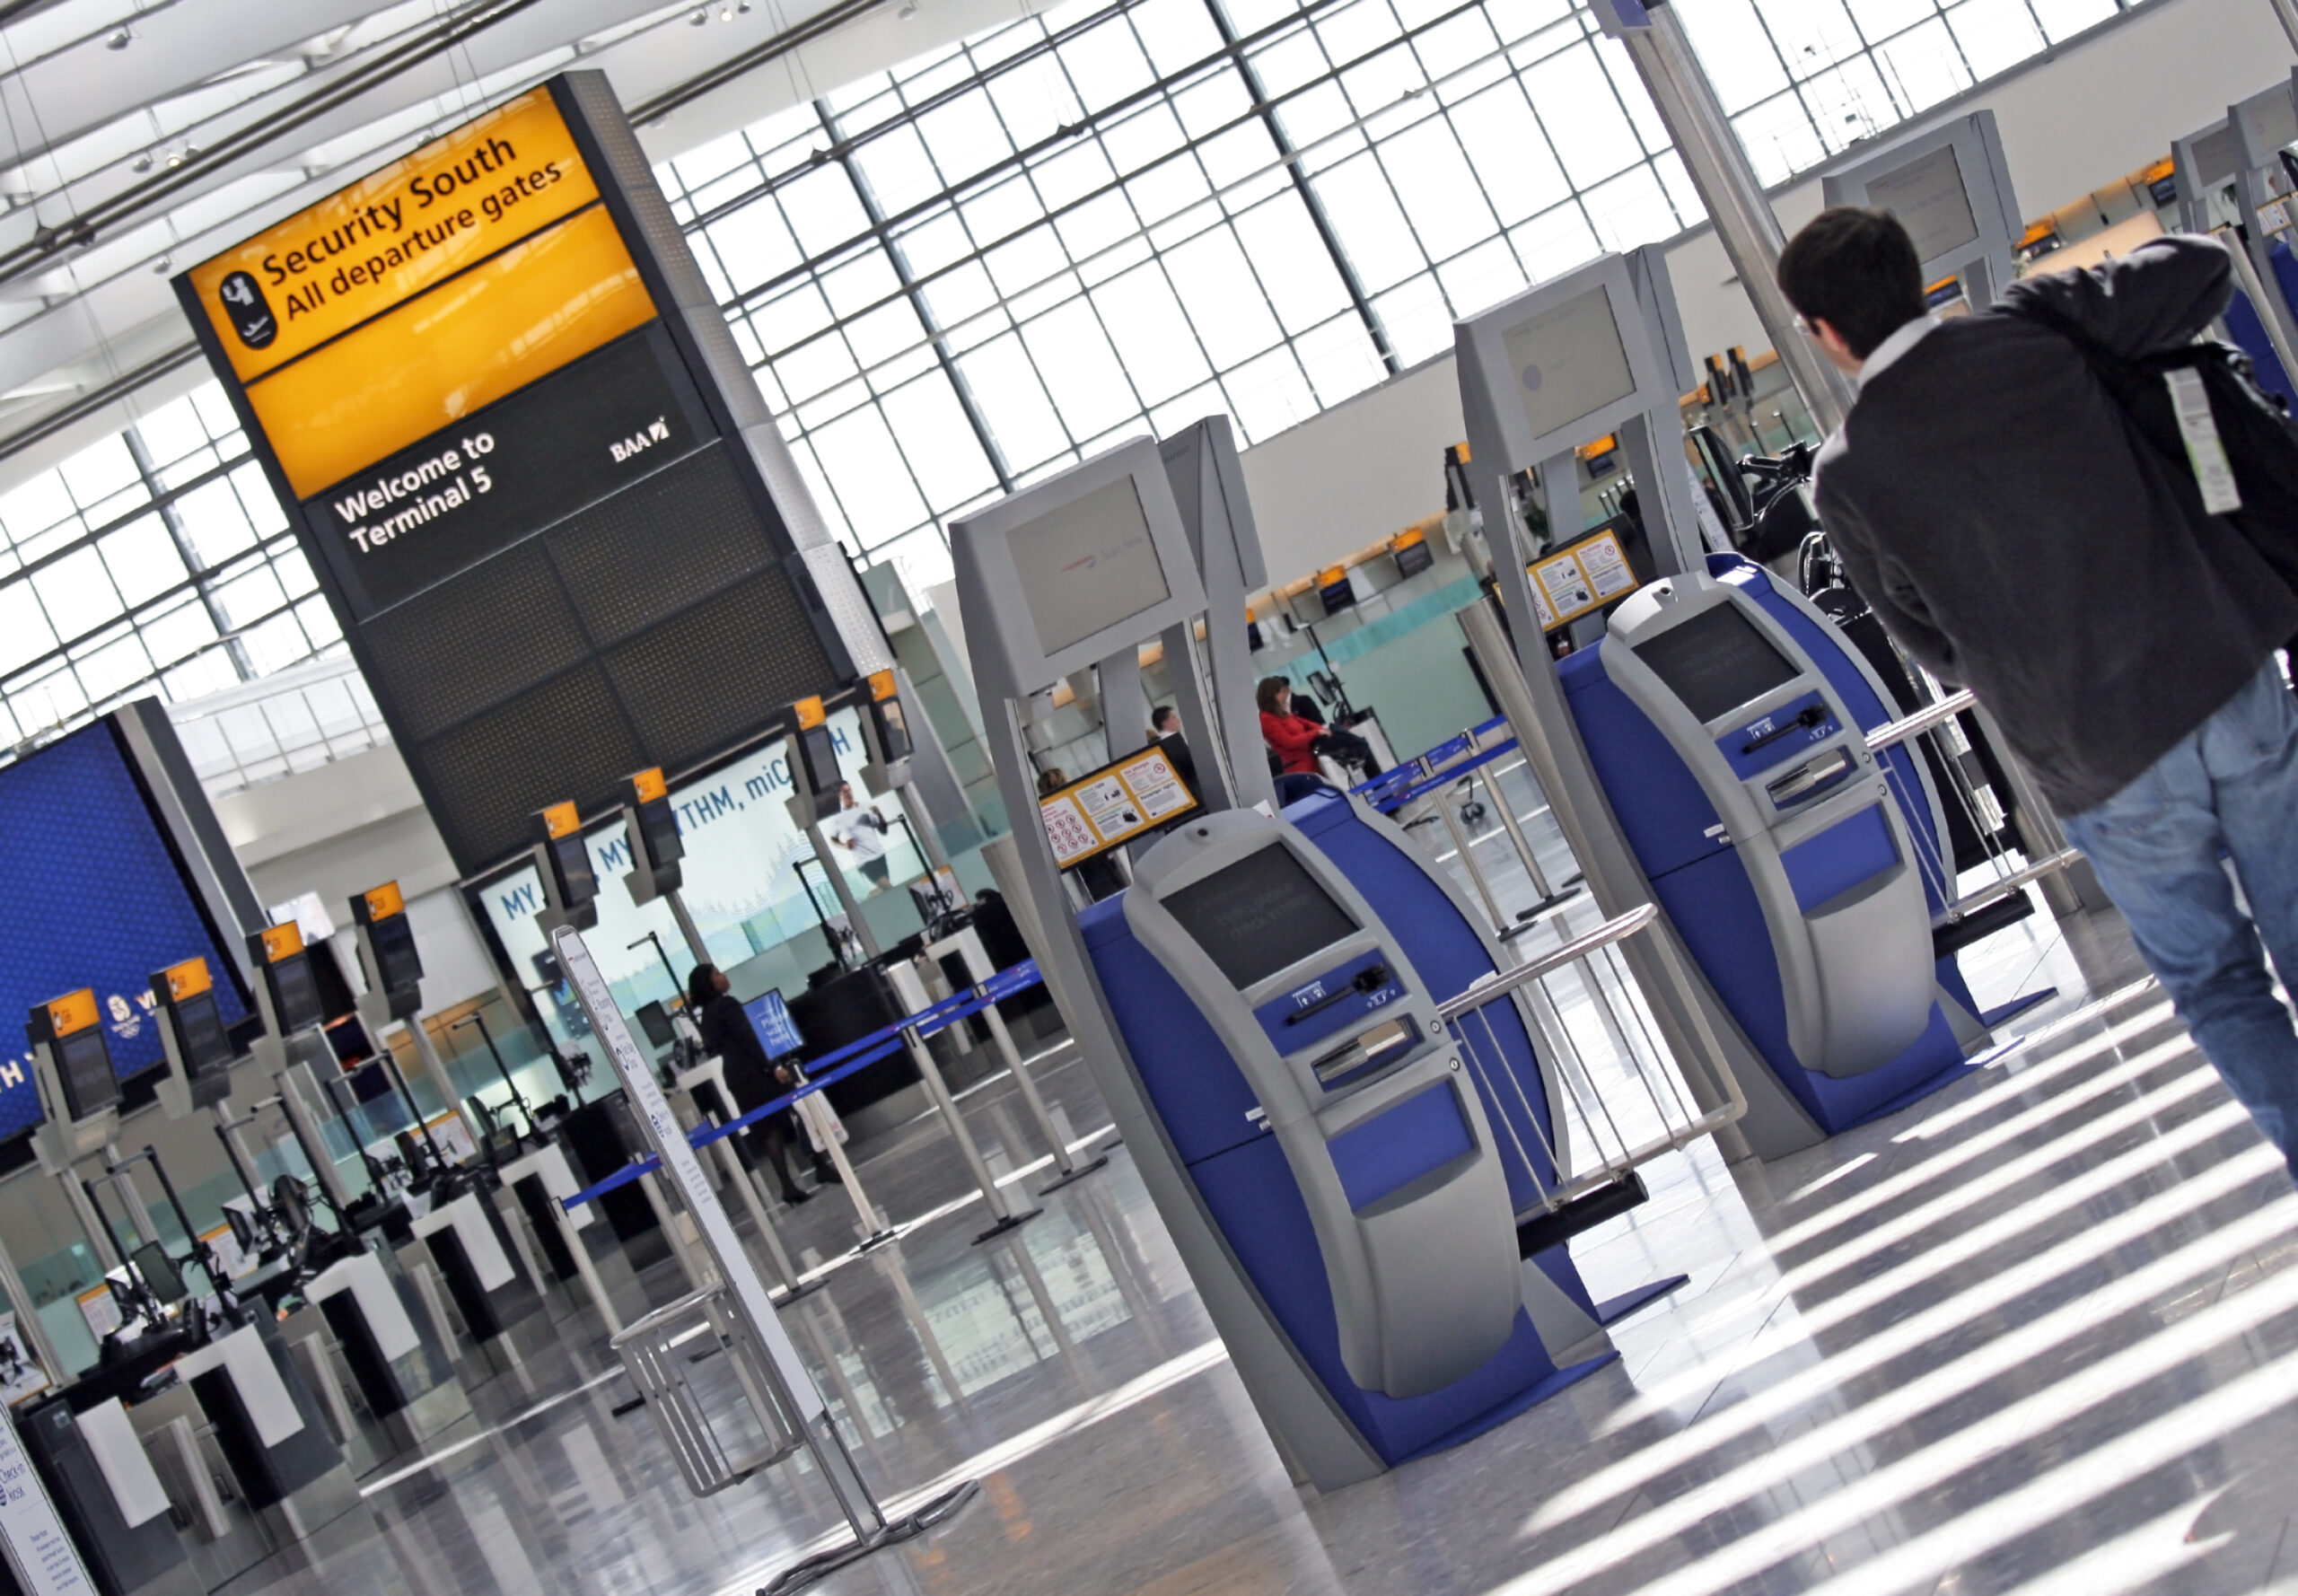 Security Screening at Heathrow Airport: